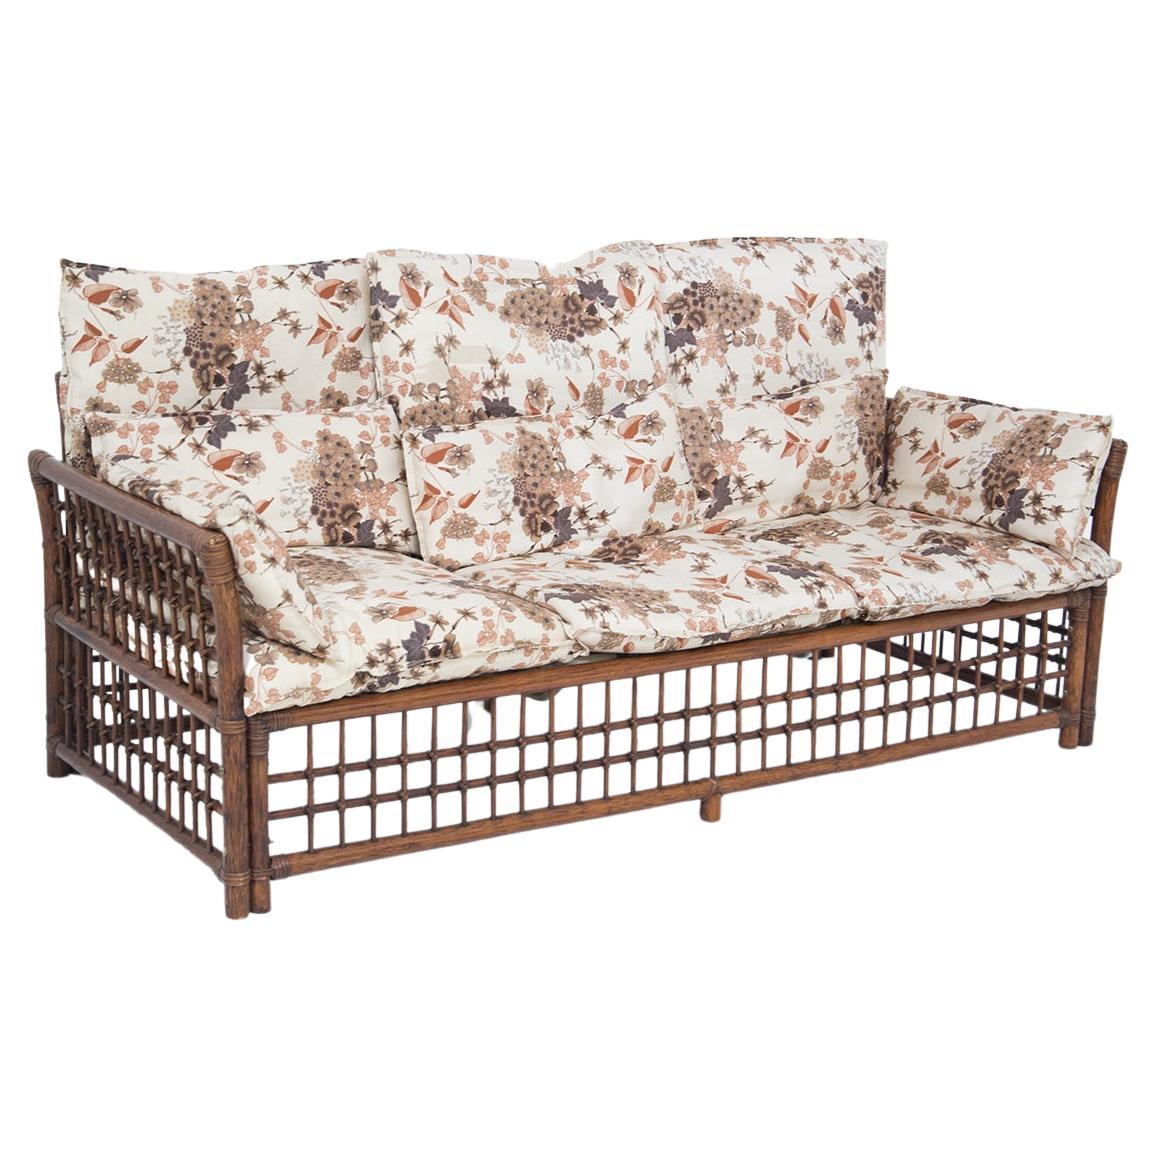 Vivai del Sud Vintage-Sofa aus Holz und Rattan mit floralem Stoff im Angebot